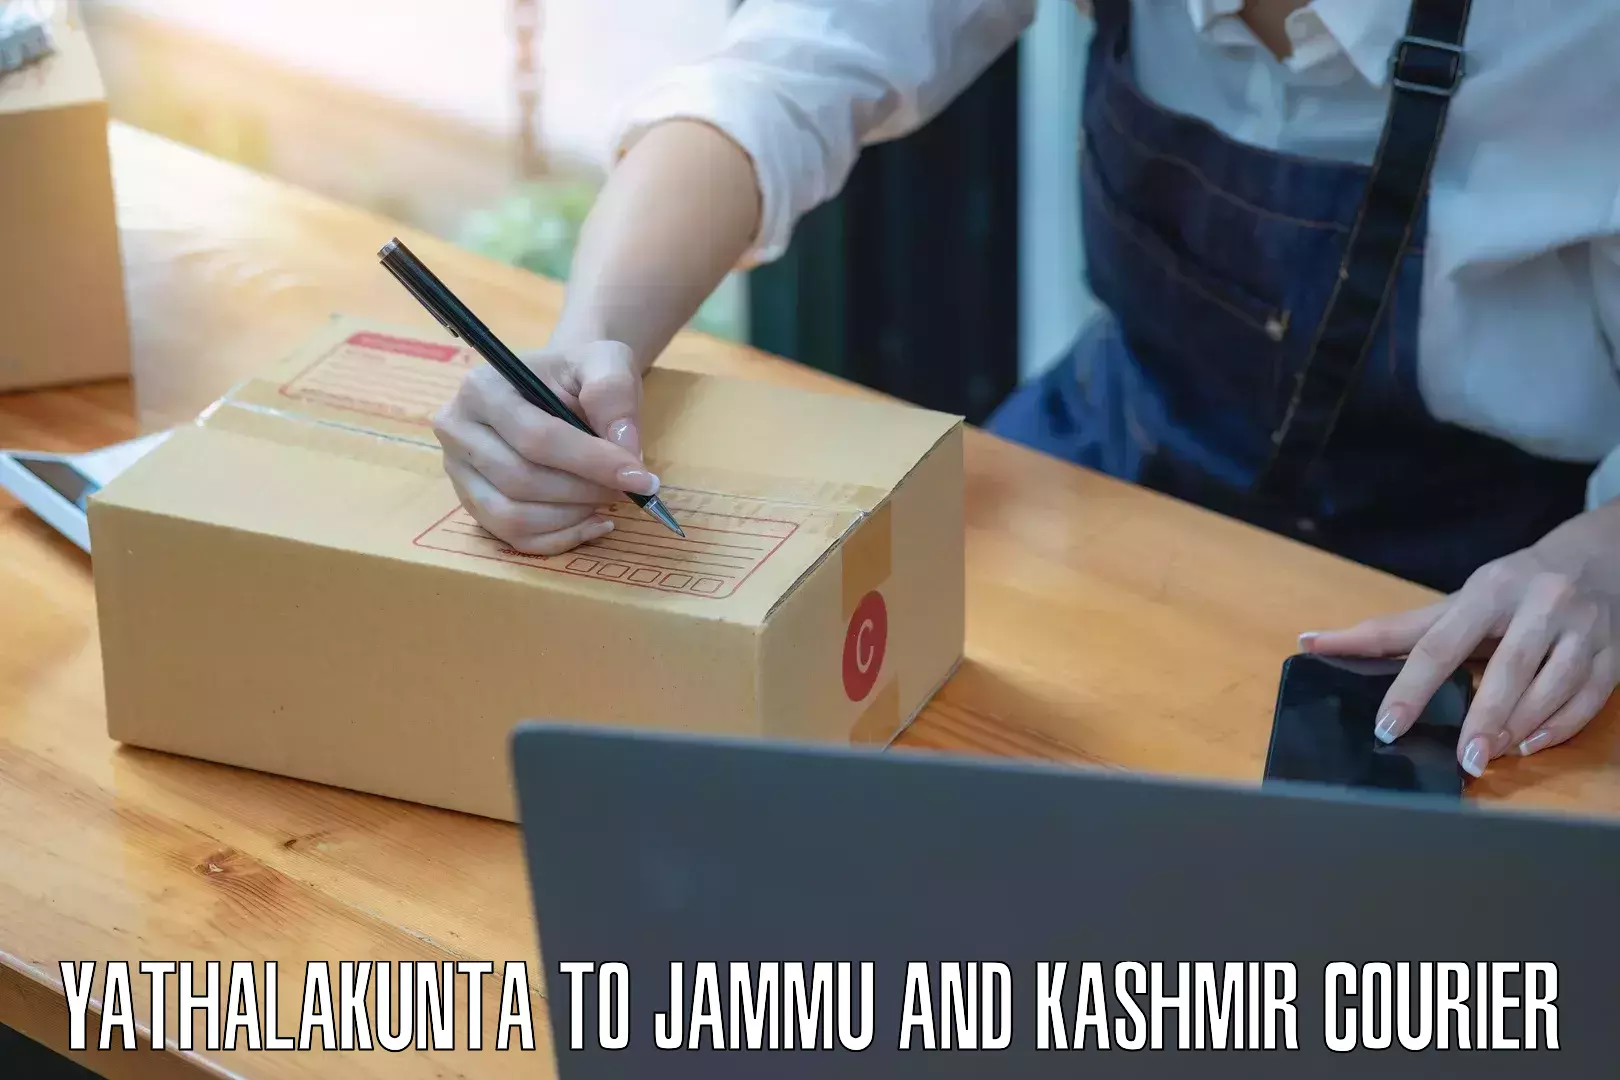 Bulk courier orders Yathalakunta to University of Jammu